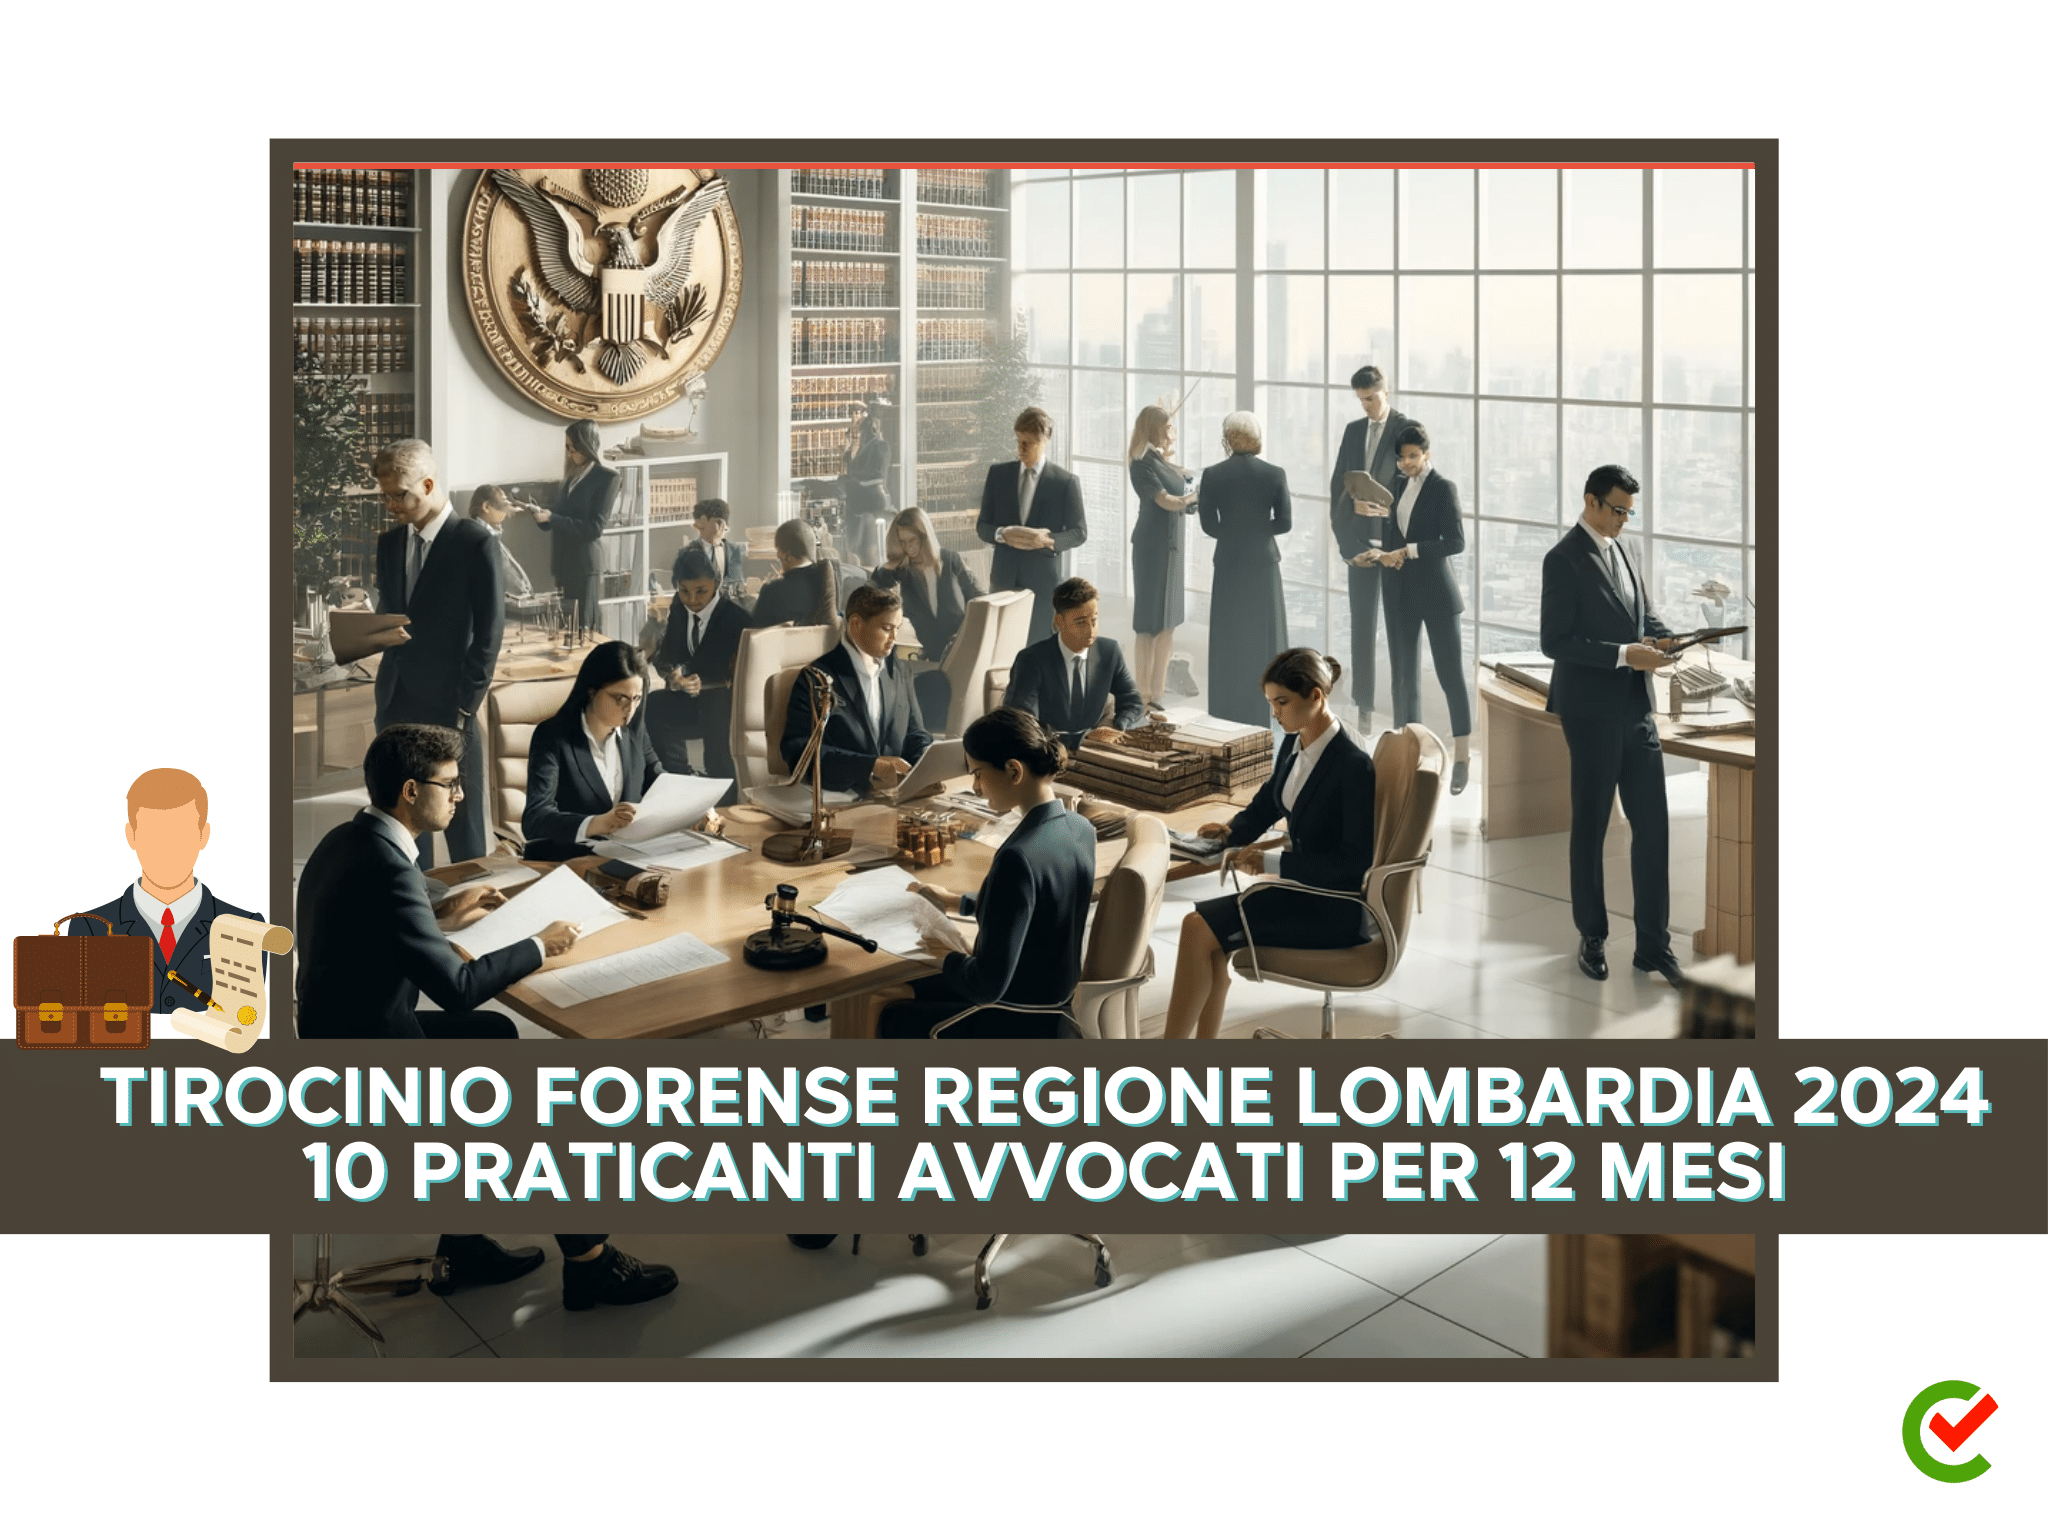 Tirocinio Forense Regione Lombardia 2024 - 10 praticanti per 12 mesi